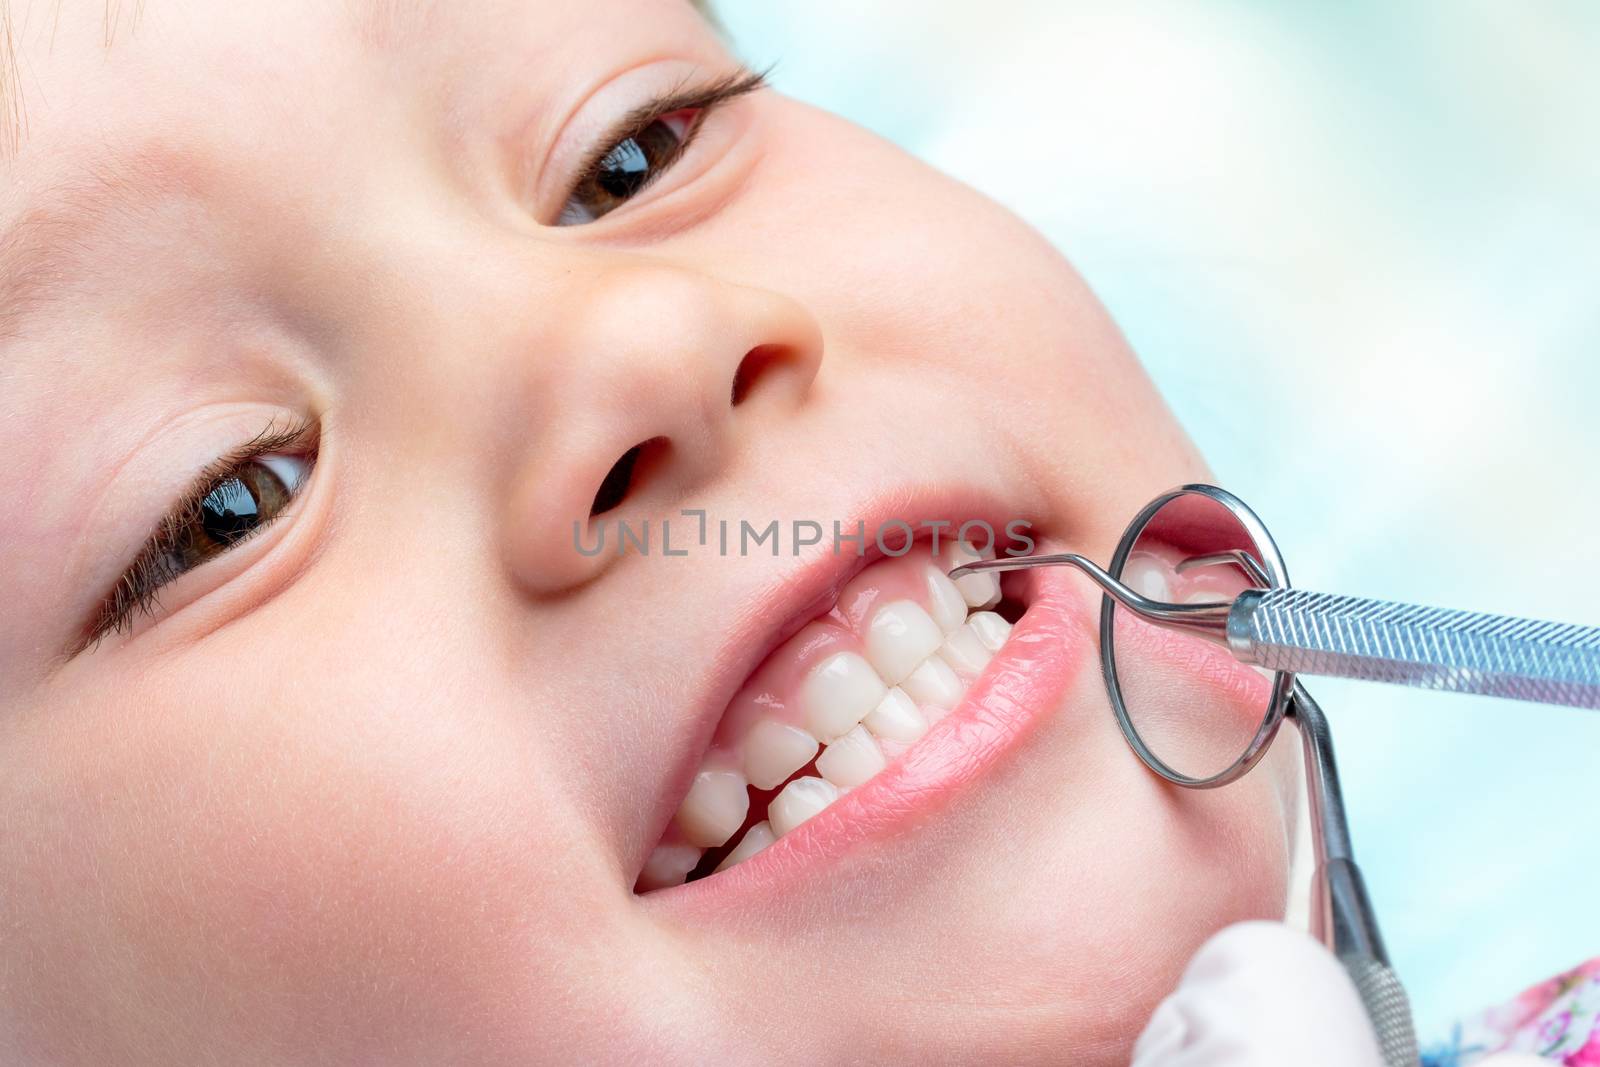 Child at dental check up. by karelnoppe